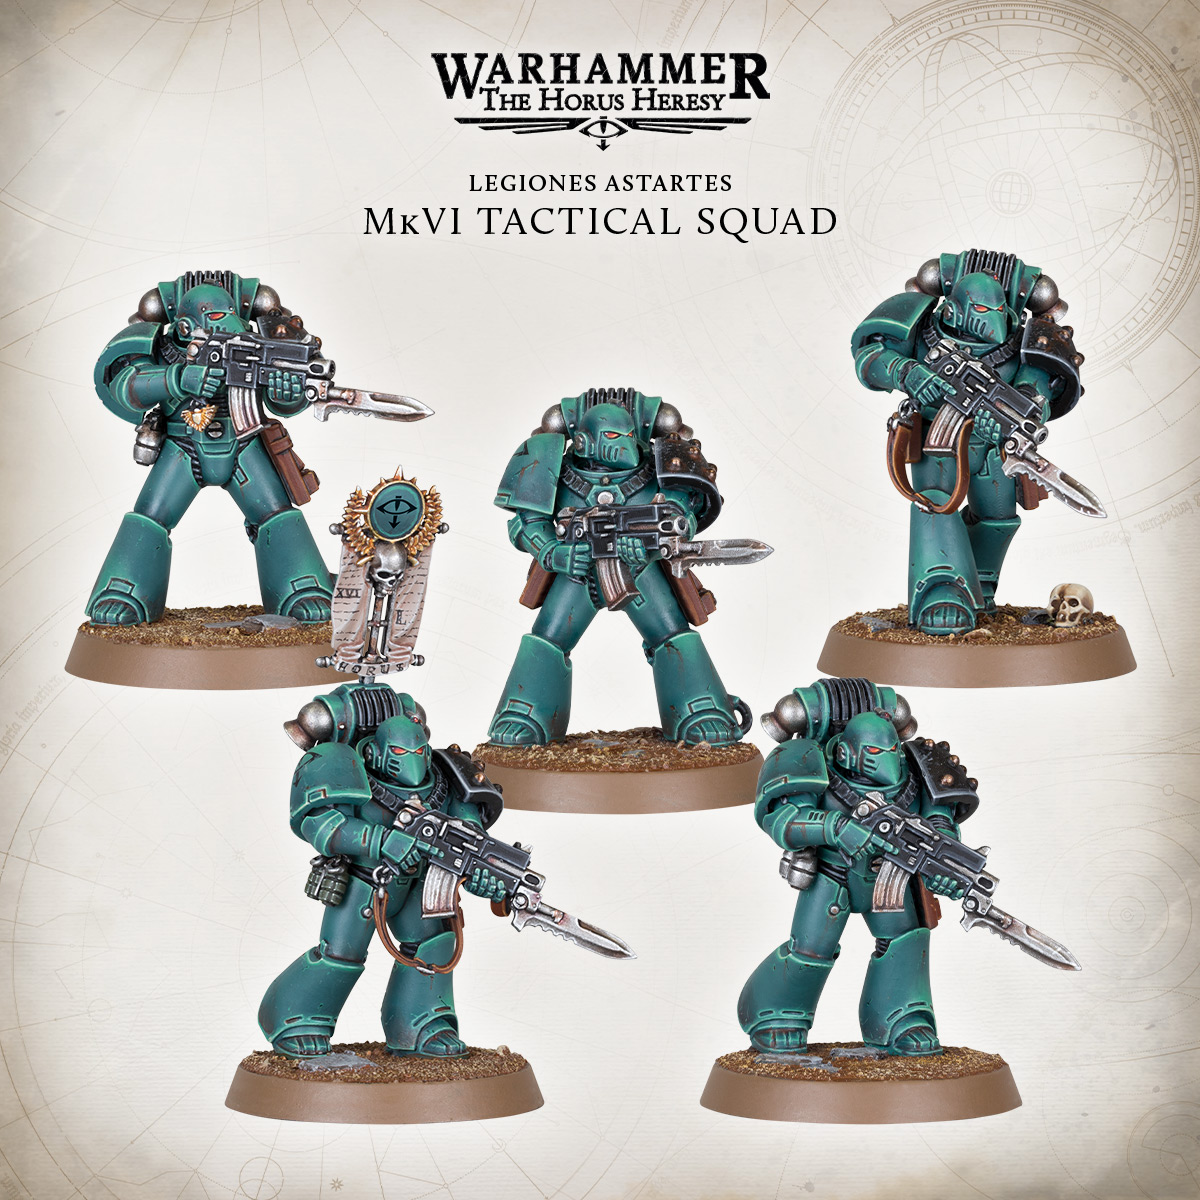 MKVI Tactical Squad #2 - Warhammer The Horus Heresy